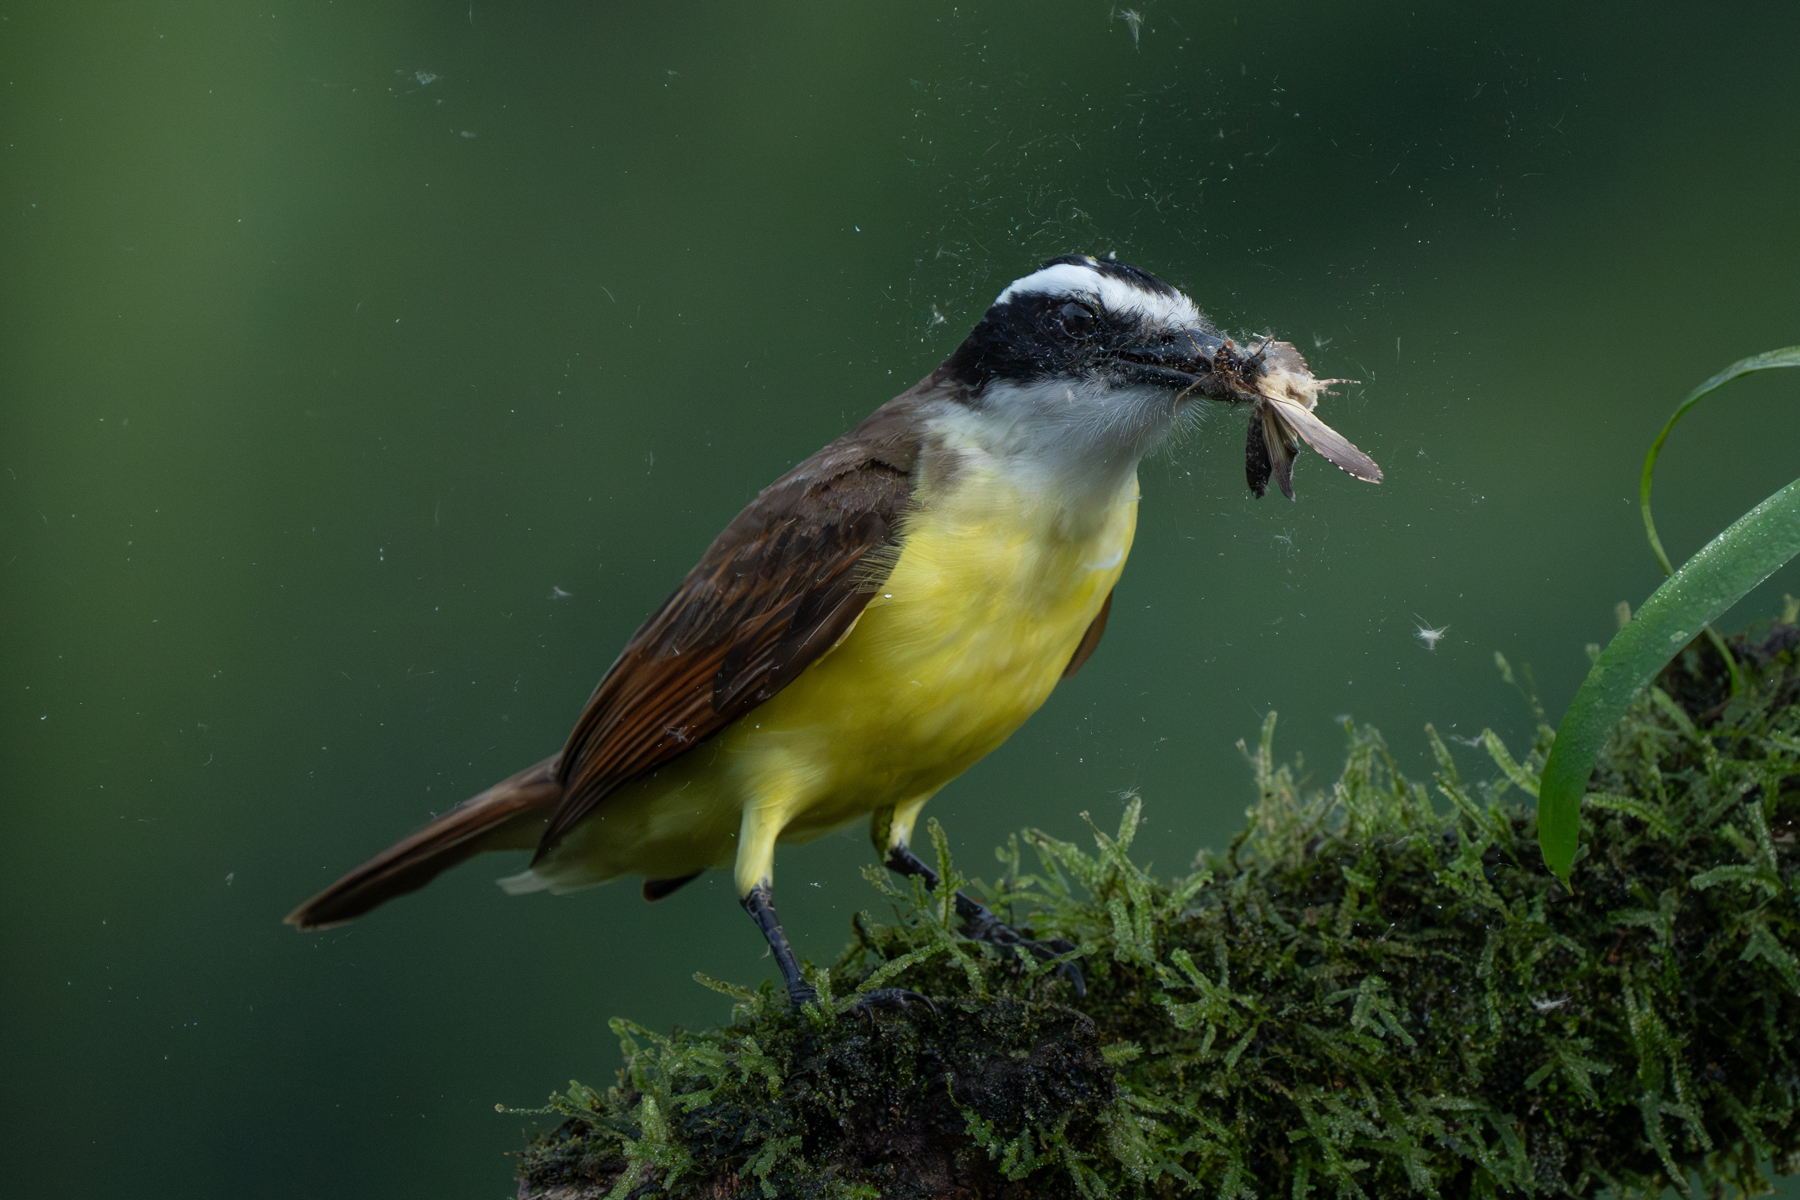 A Kiskadee feasting on a moth (image by Inger Vandyke)